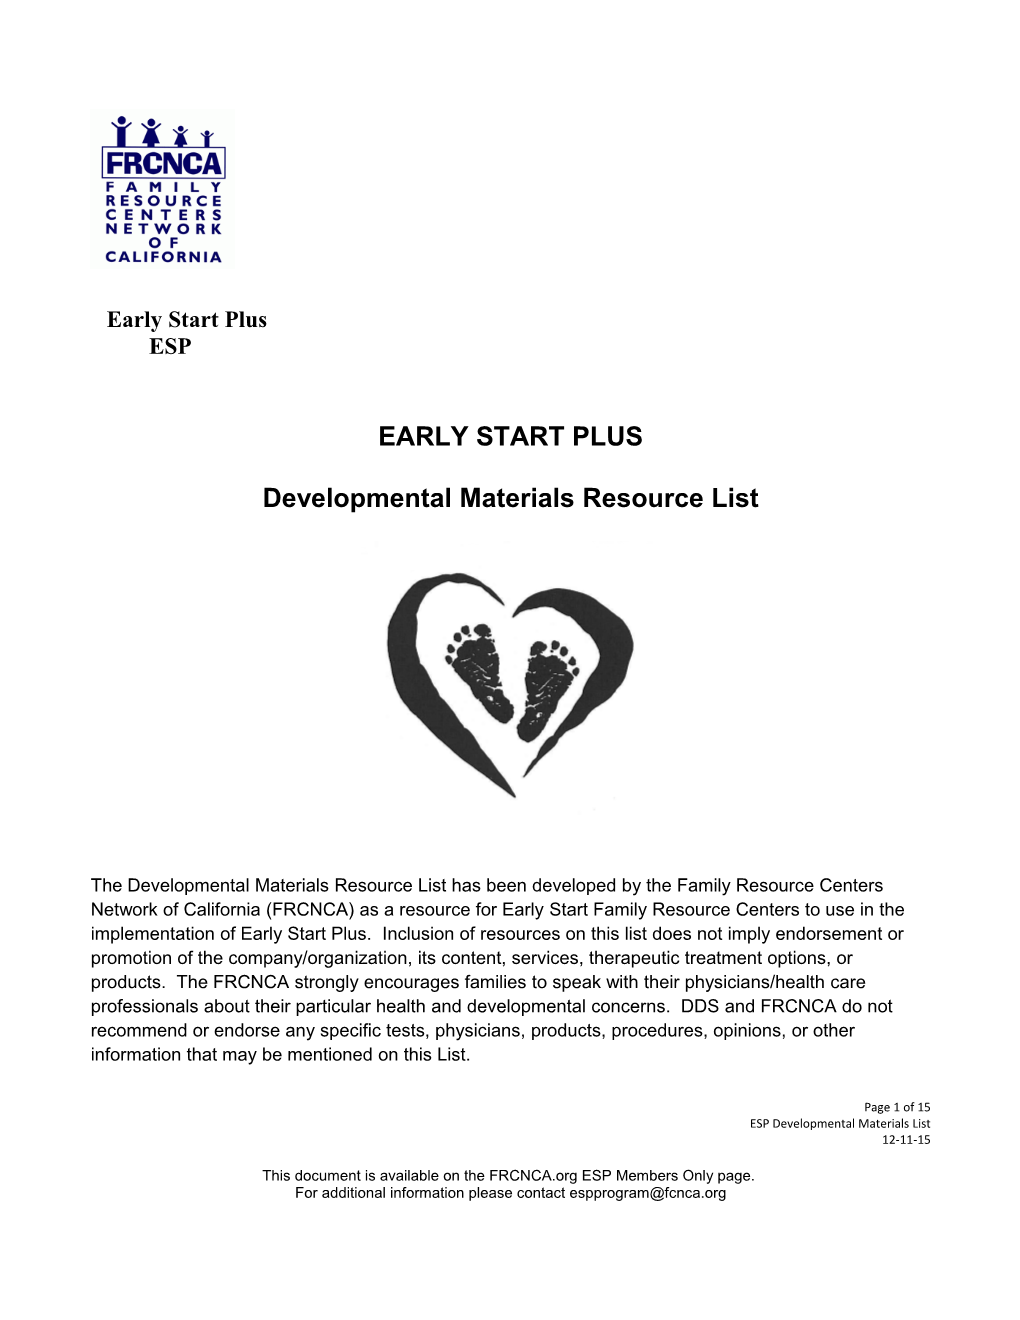 Developmental Materials Resource List